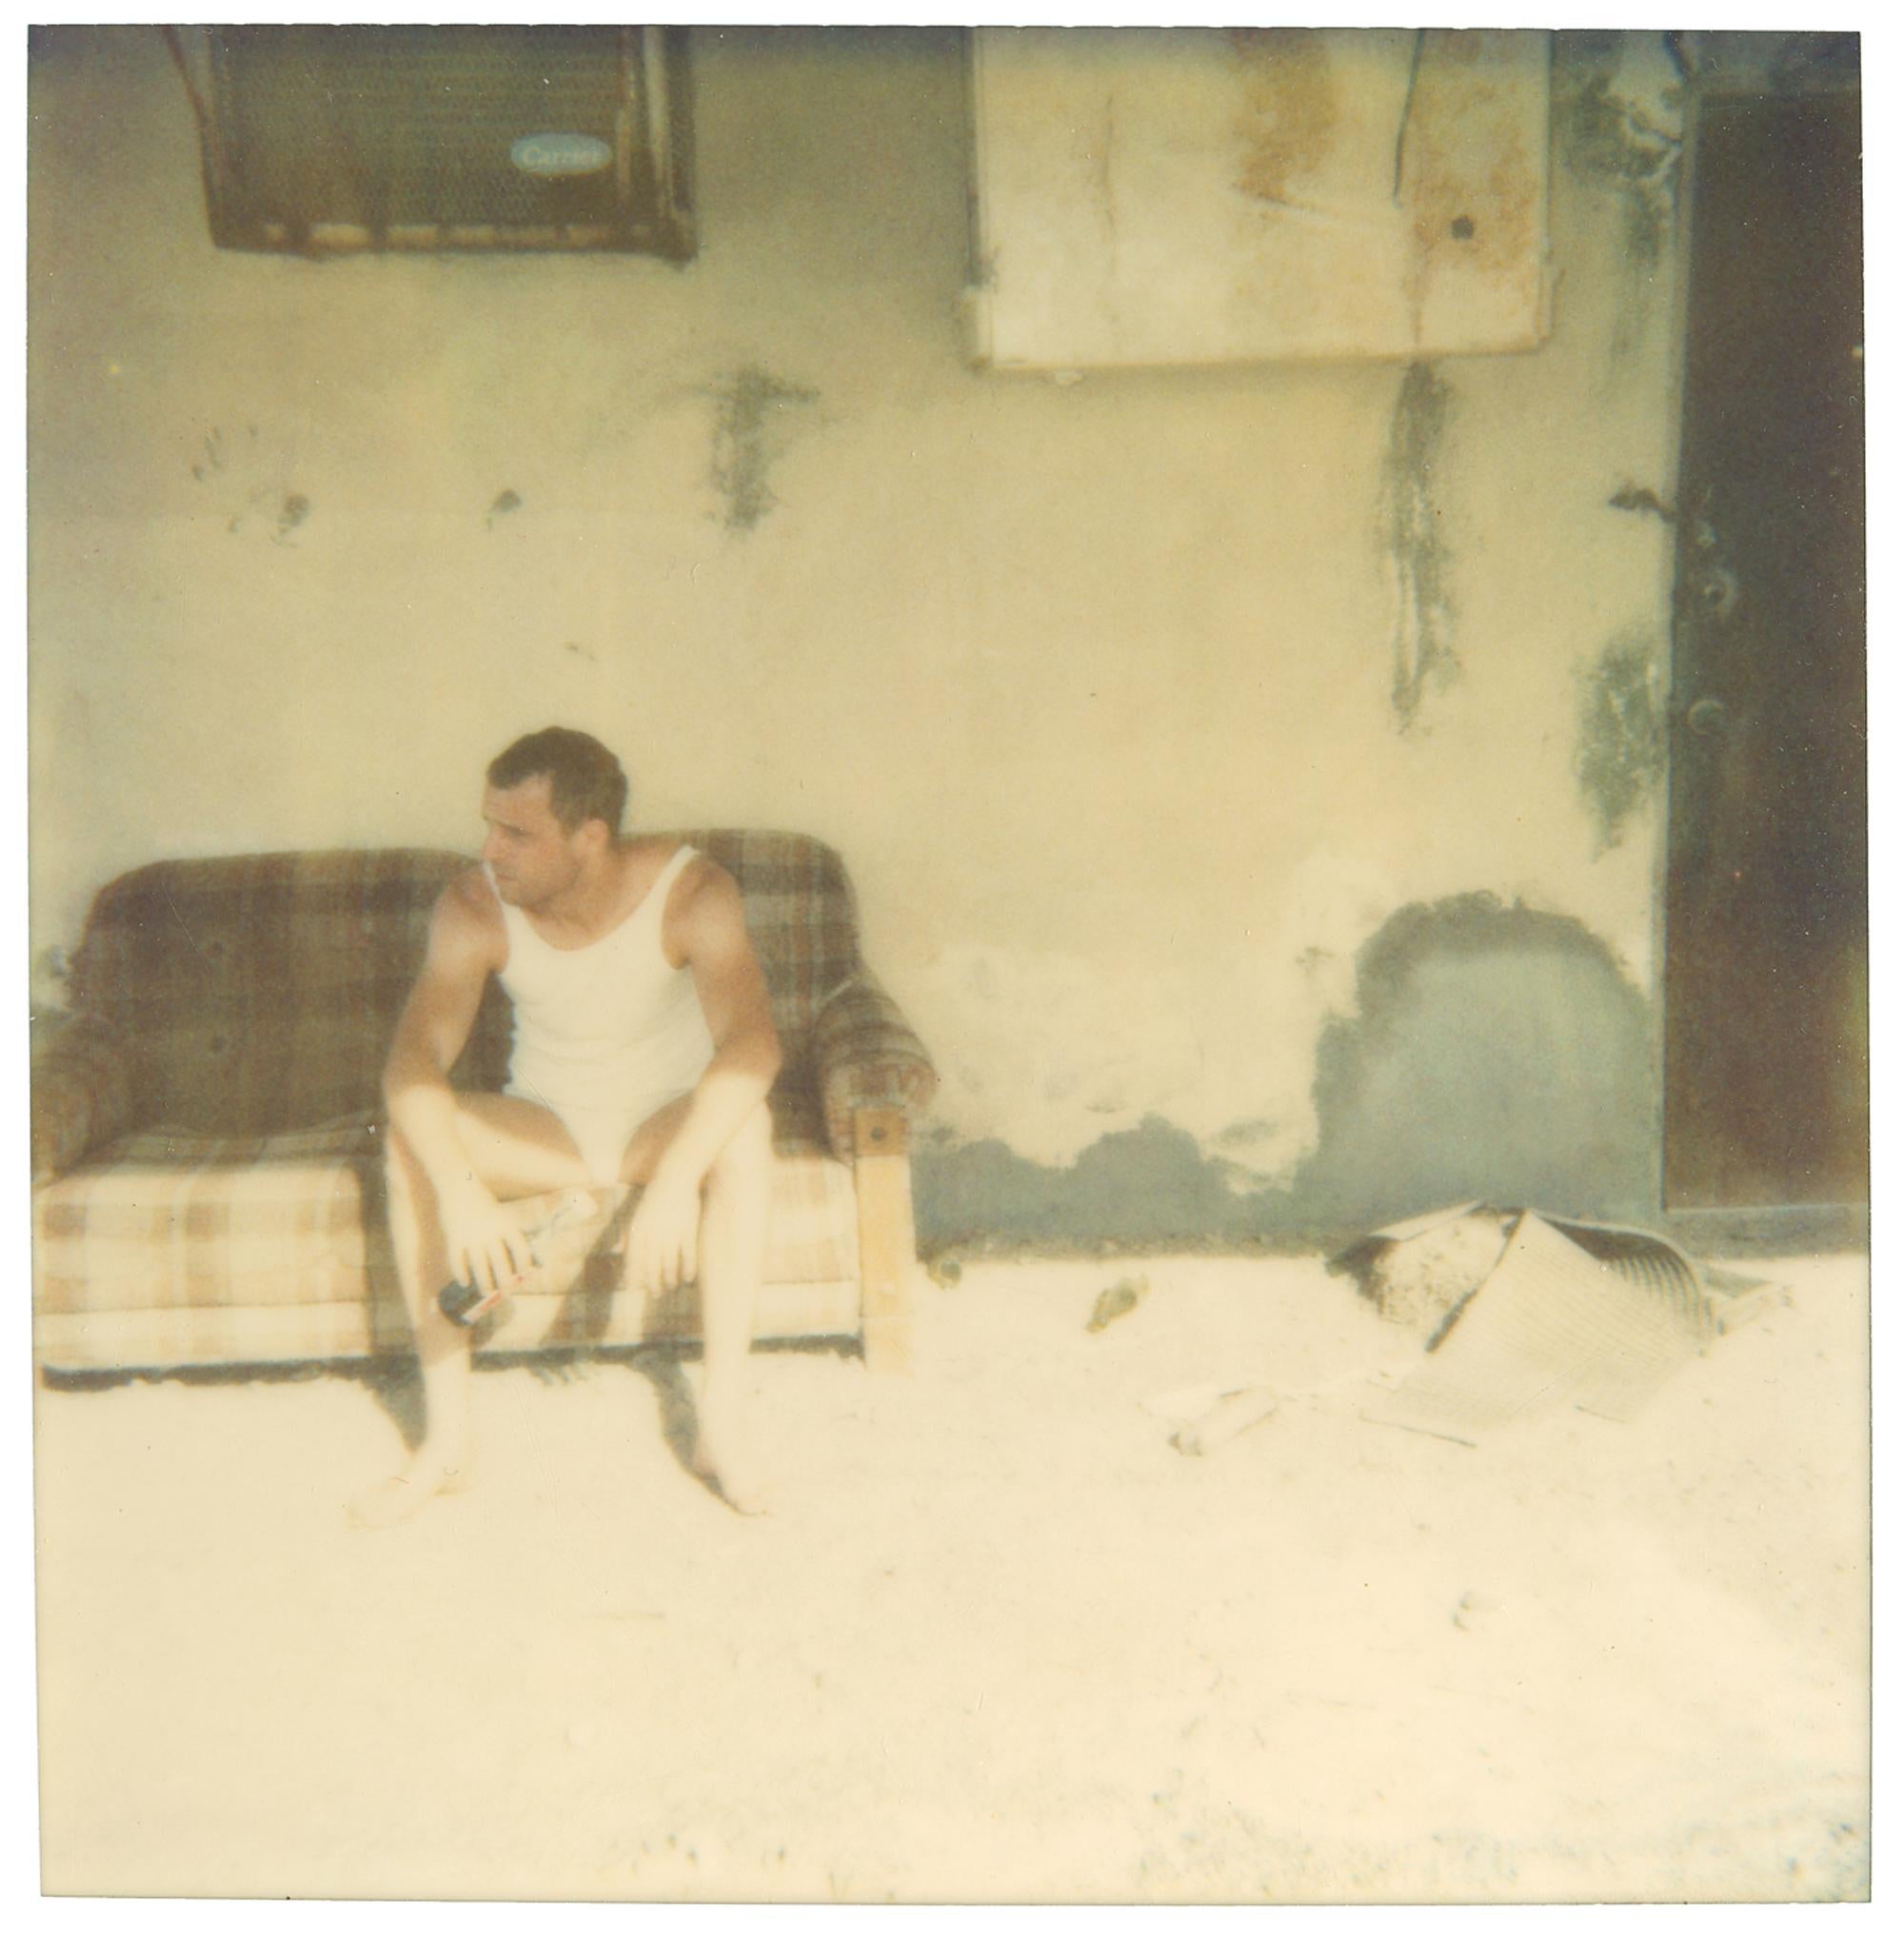 Stefanie Schneider Portrait Photograph - Salton Sea Life (American Depression)